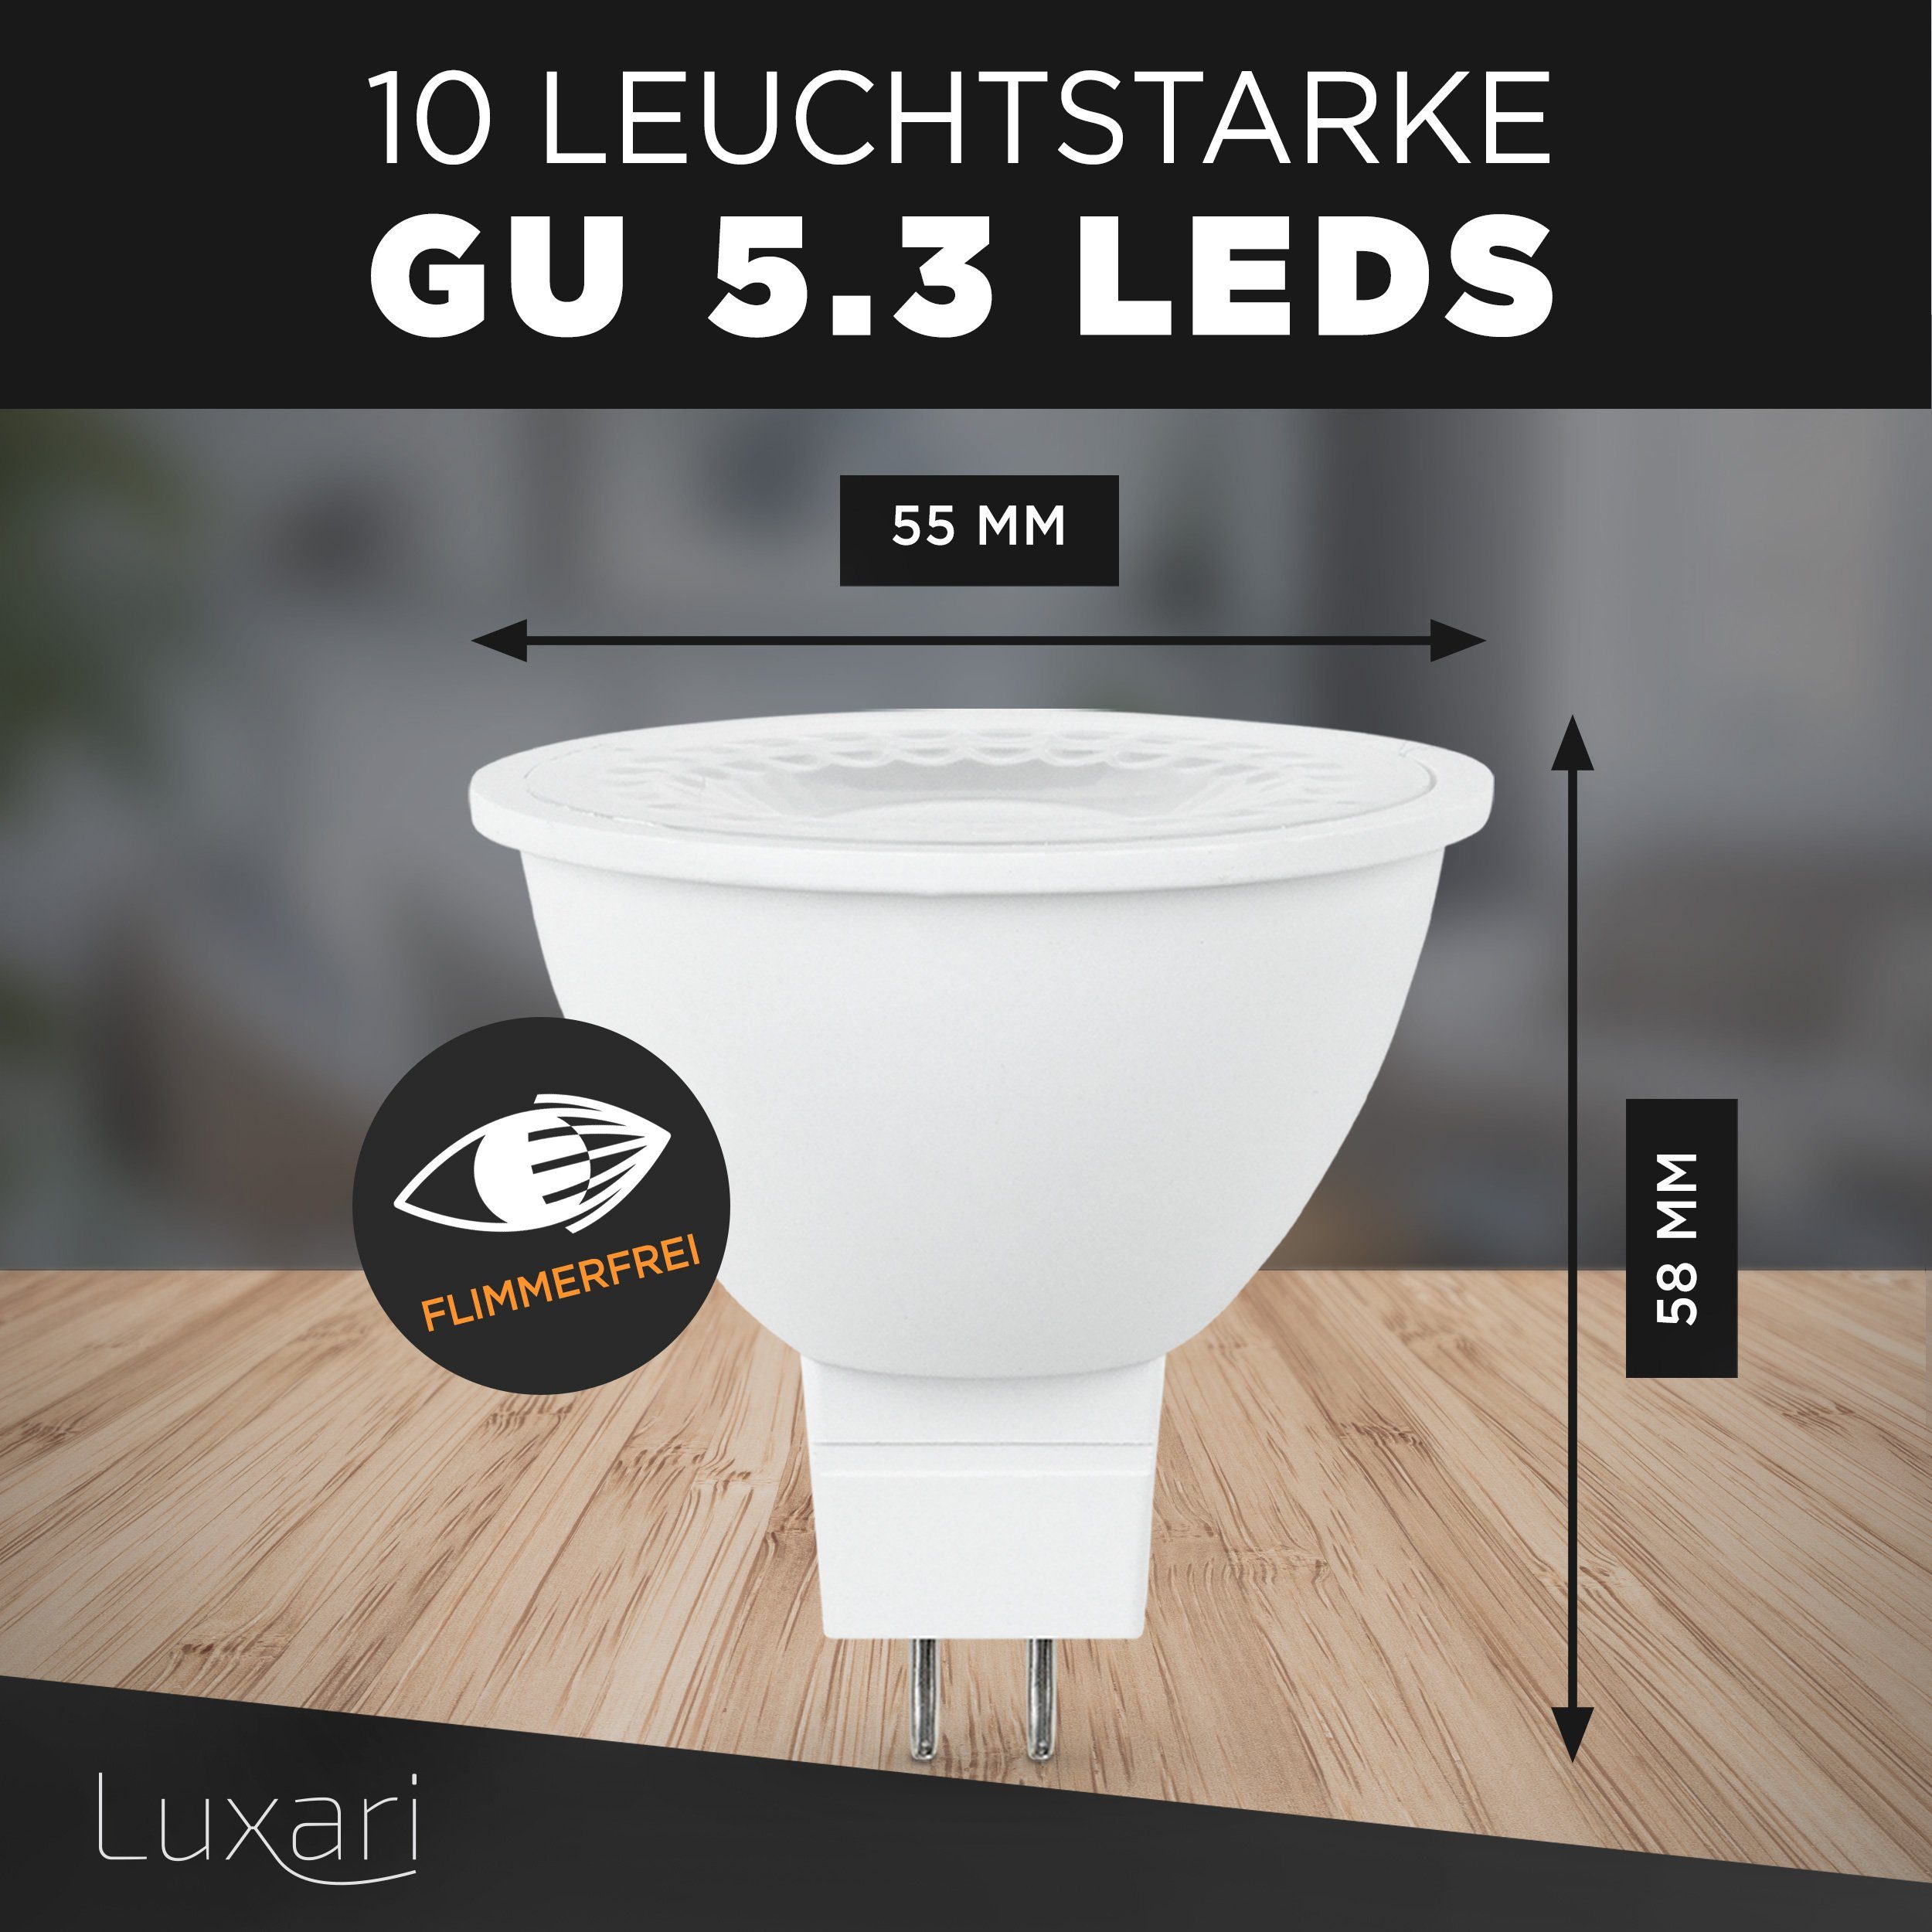 Luxari LED fest LED, LED [10x] LED integriert MR16 Lampe − GU5.3 Deckenleuchte Luxari